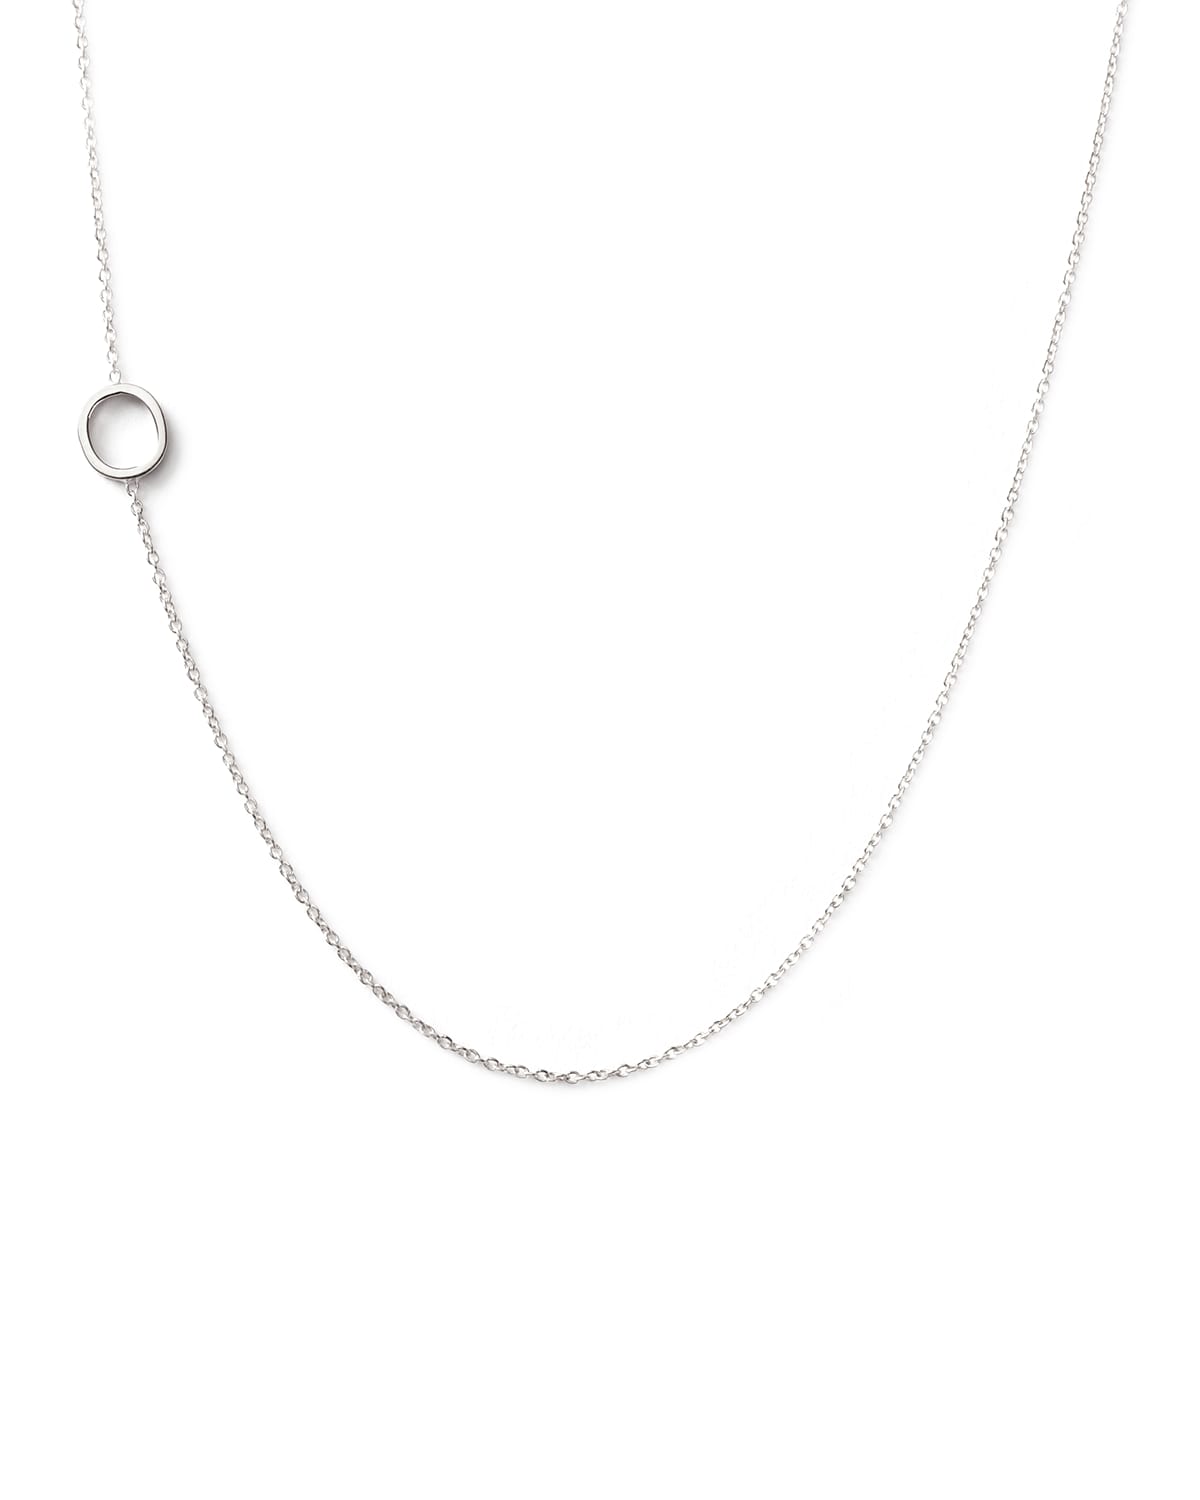 Maya Brenner Designs 14k White Gold Mini Letter Necklace In O